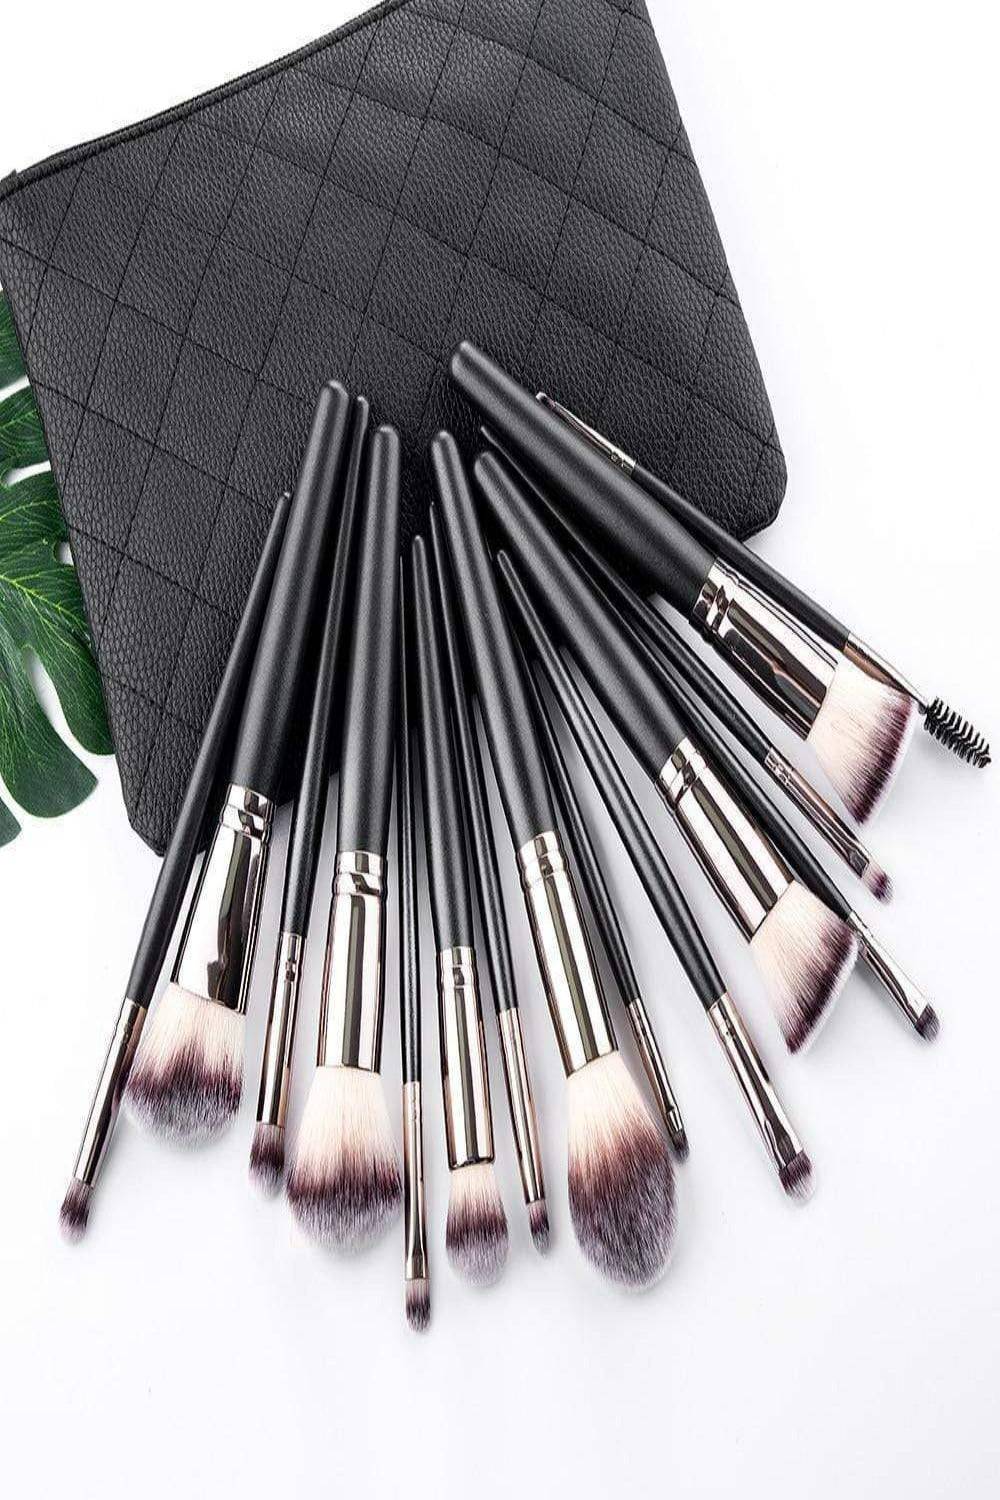 Soft Professional Makeup Brush Set With Bag - 10pcs Brushes - TGC Boutique - Makeup Brush Set